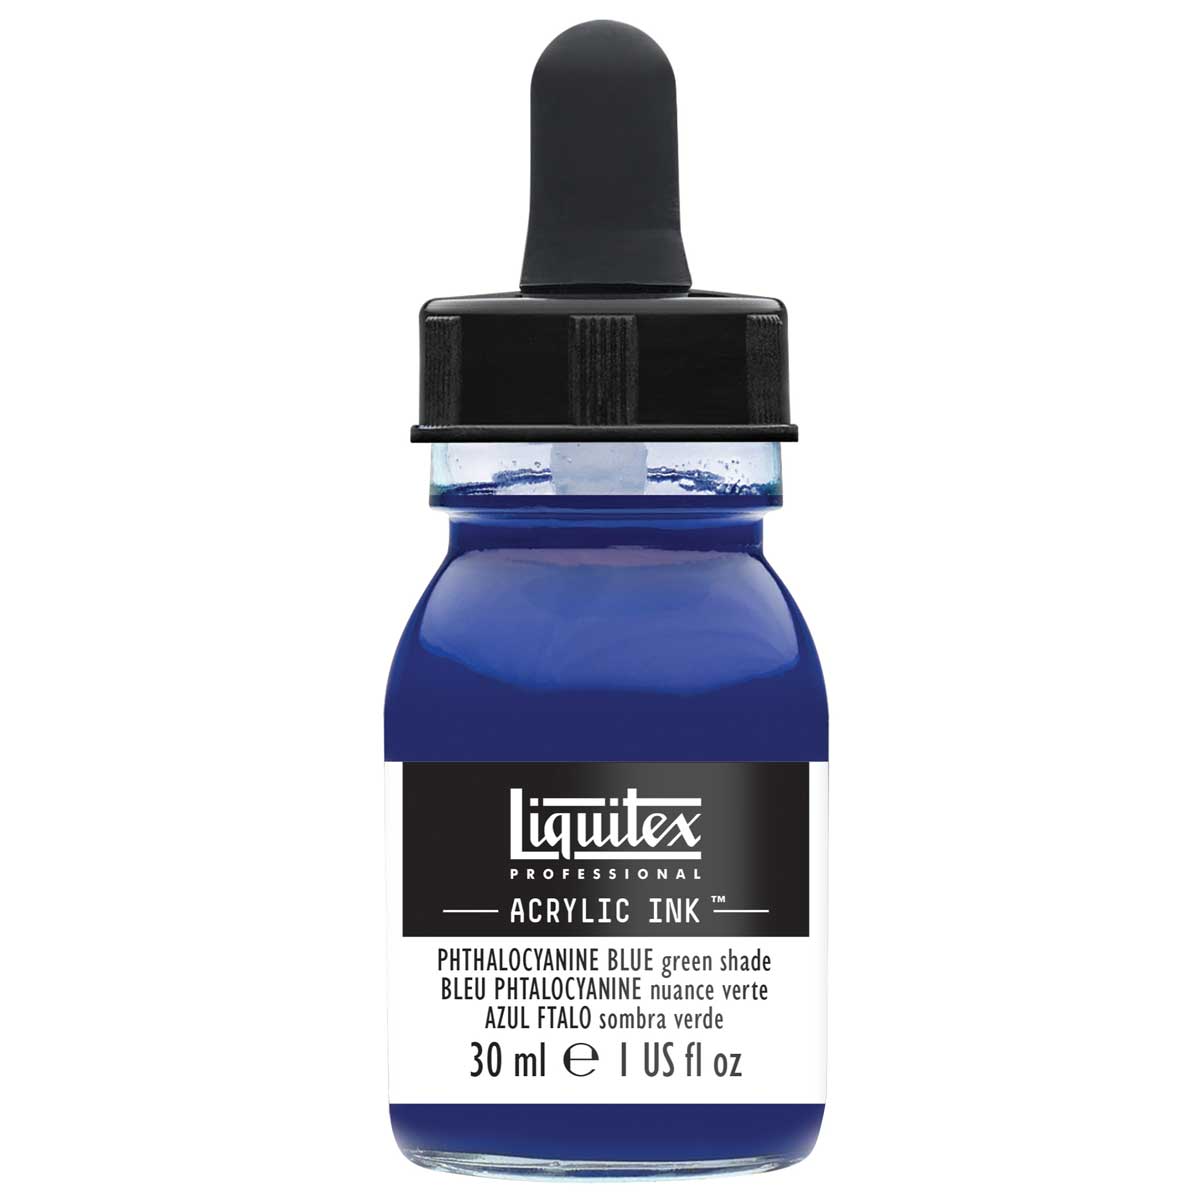 Liquitex Professional Acrylic Ink - Phthalo Blue (Green Shade) 30ml/1oz